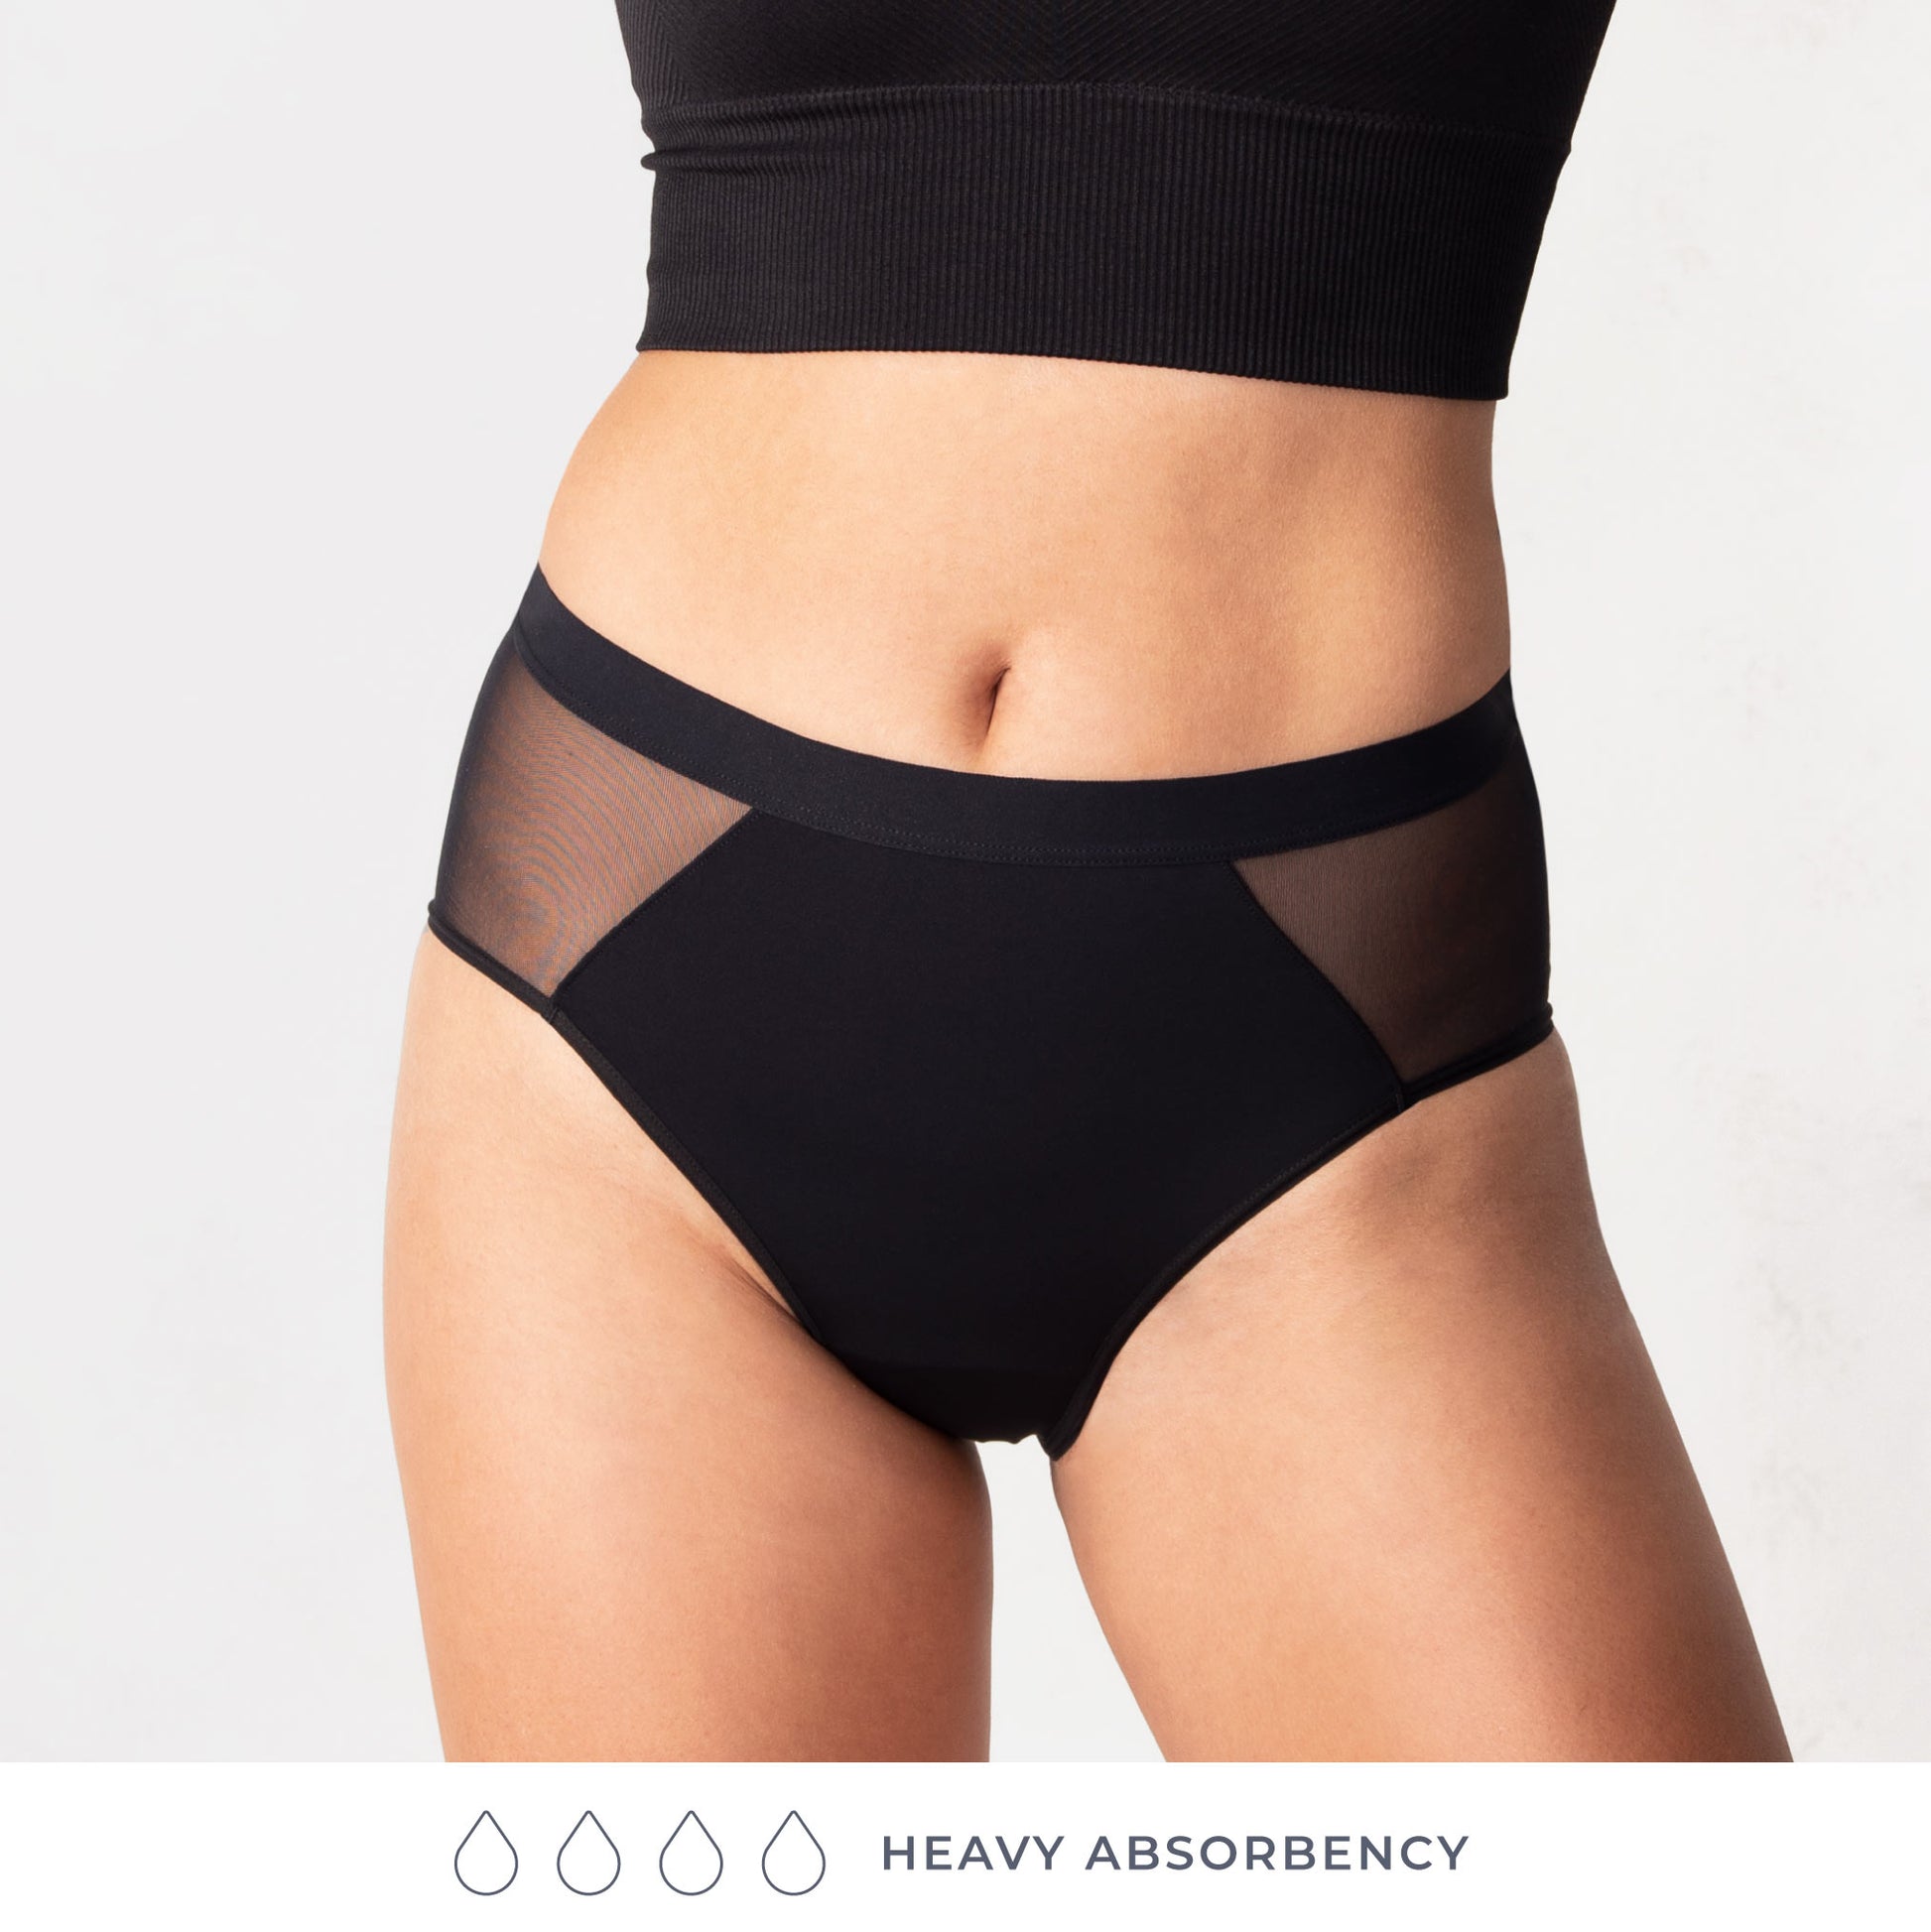 Saalt Reusable Period Underwear - Hipster Style, Volcanic Black